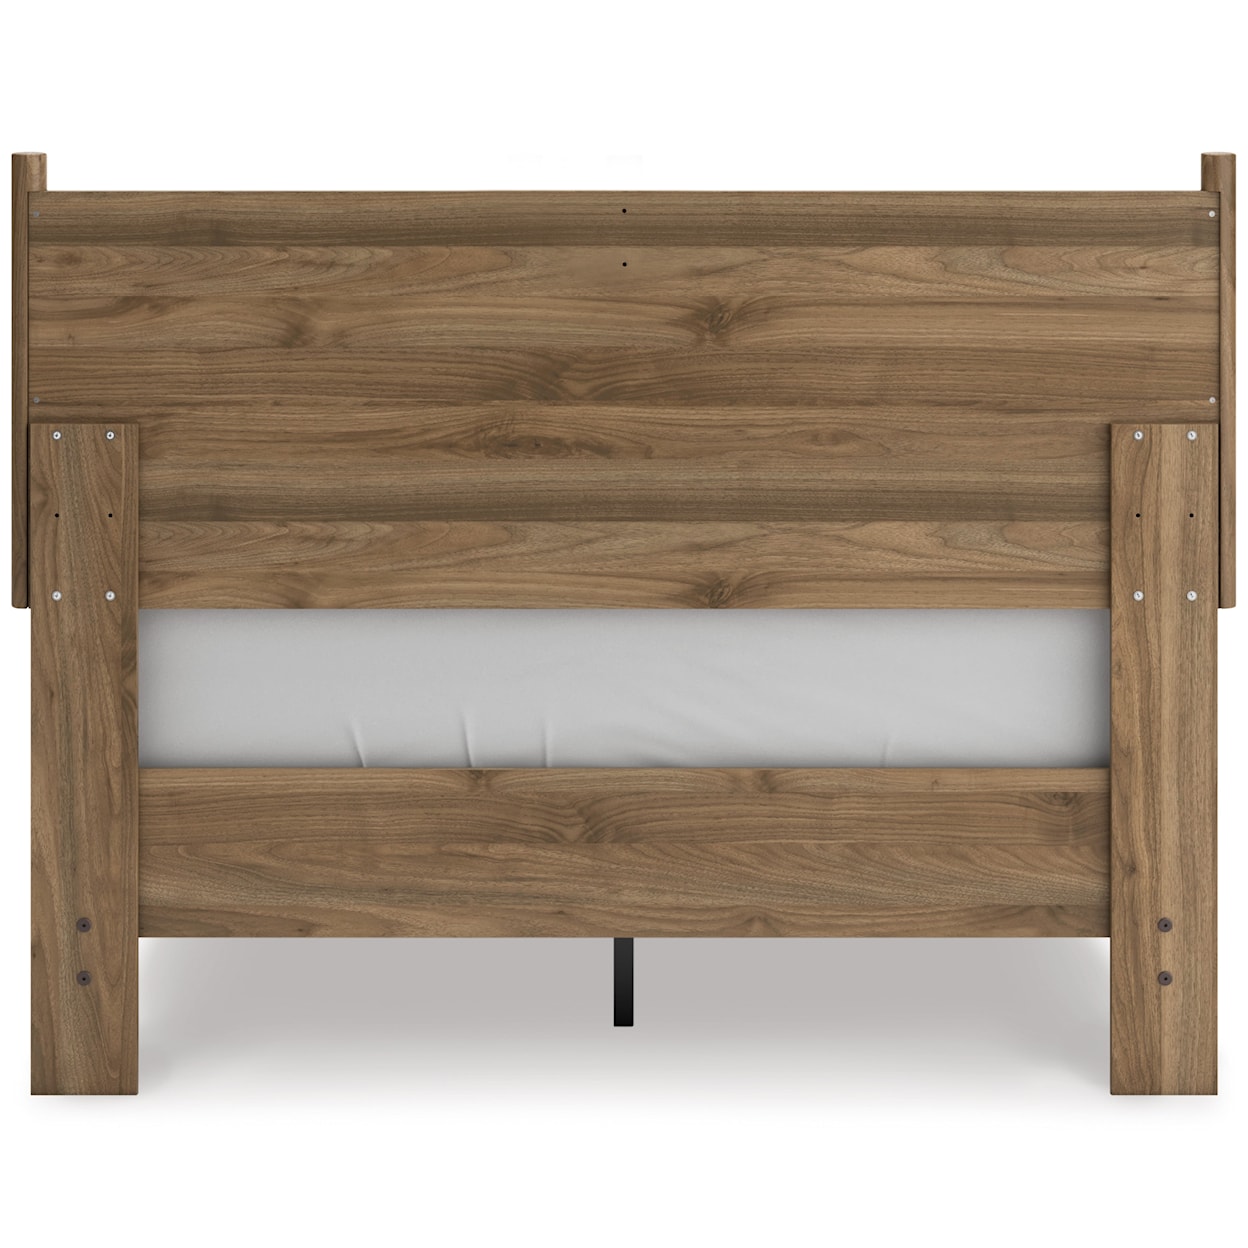 Ashley Furniture Signature Design Aprilyn Full Panel Bed